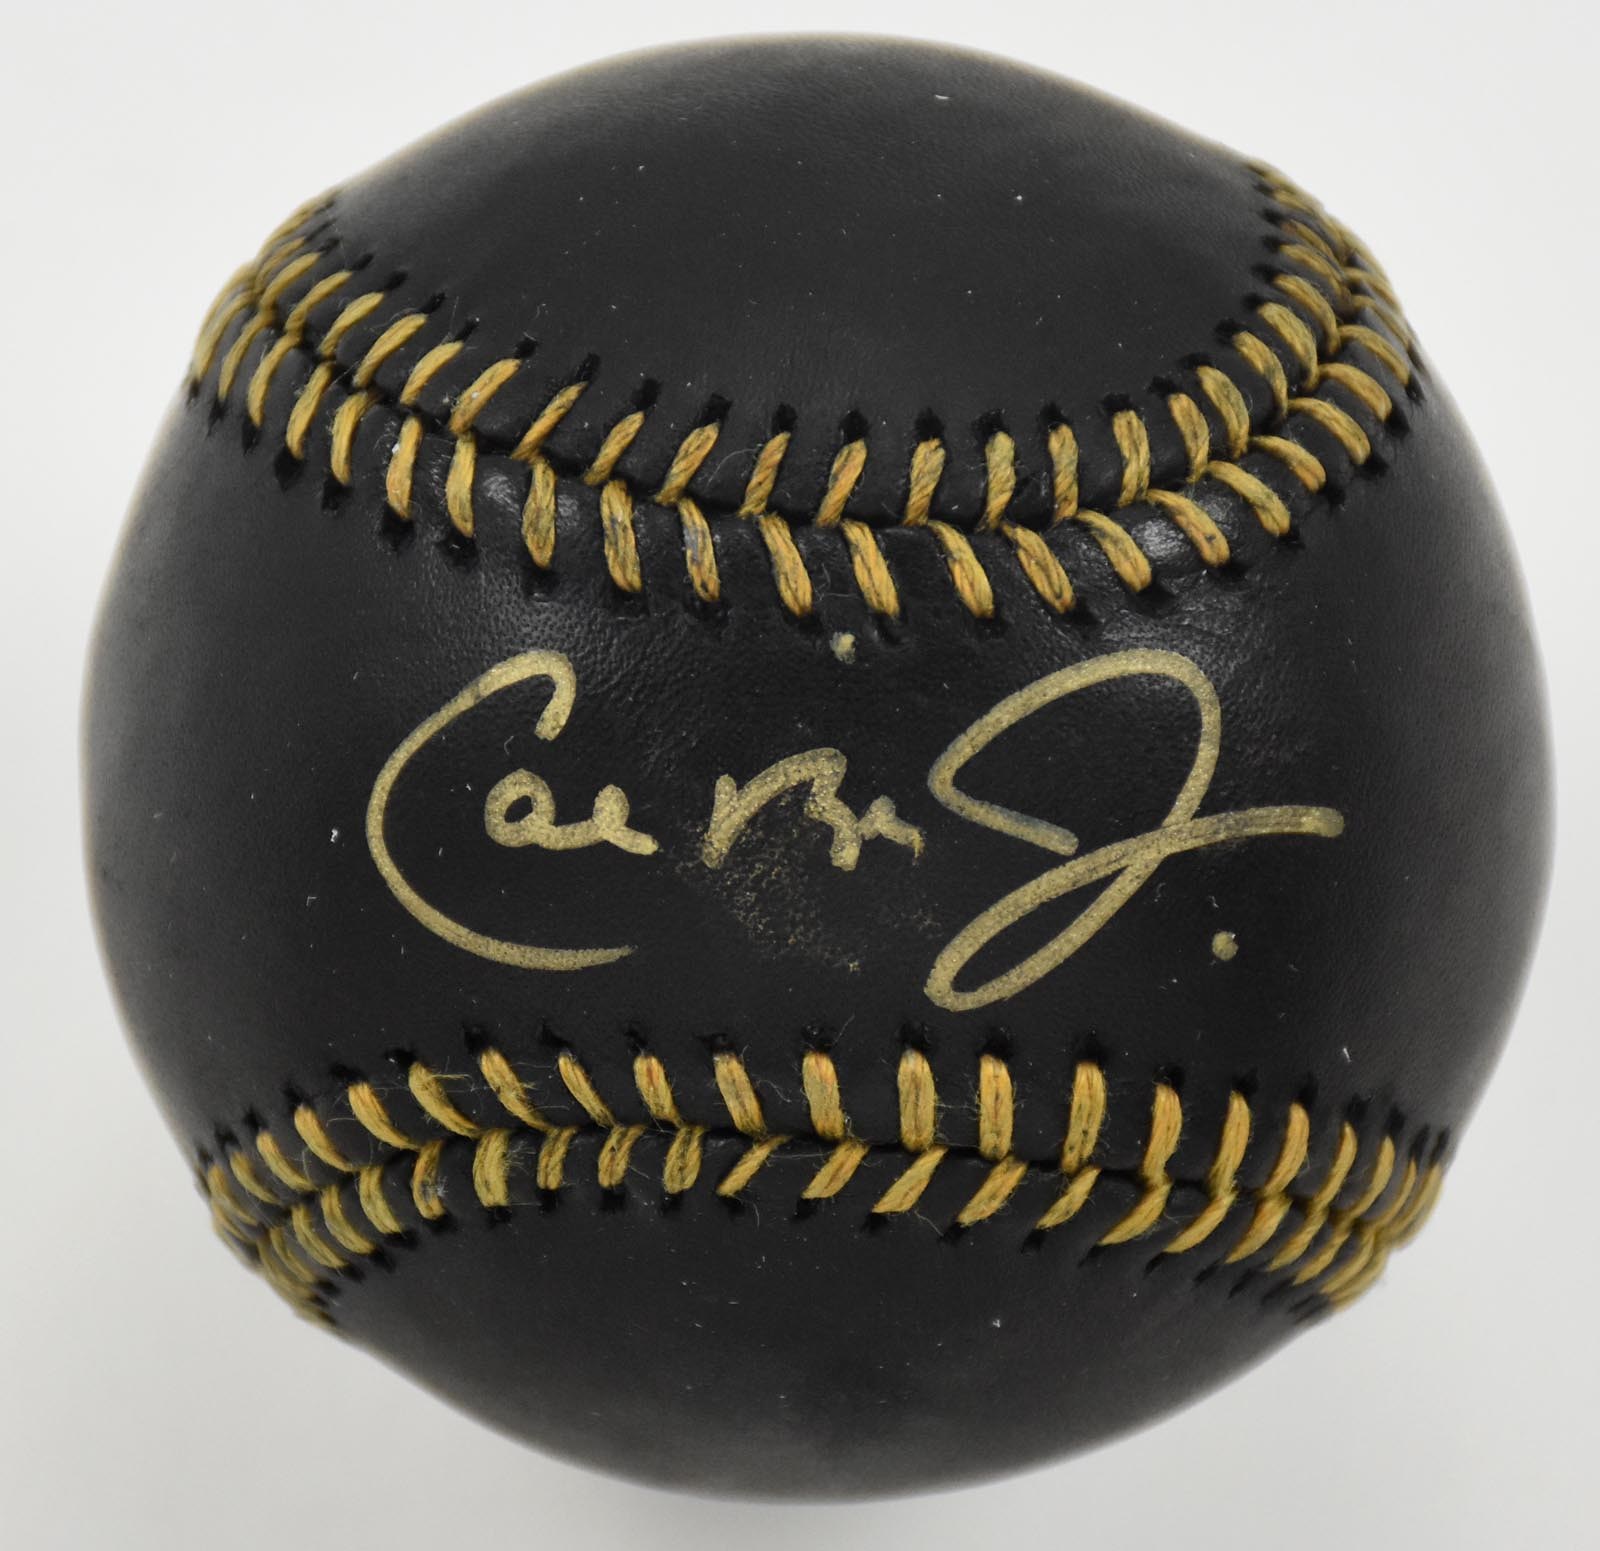 Baseball Autographs - Perfect Cal Ripken Jr. Single Signed Black Leather Baseball (PSA Graded GEM MINT 10)